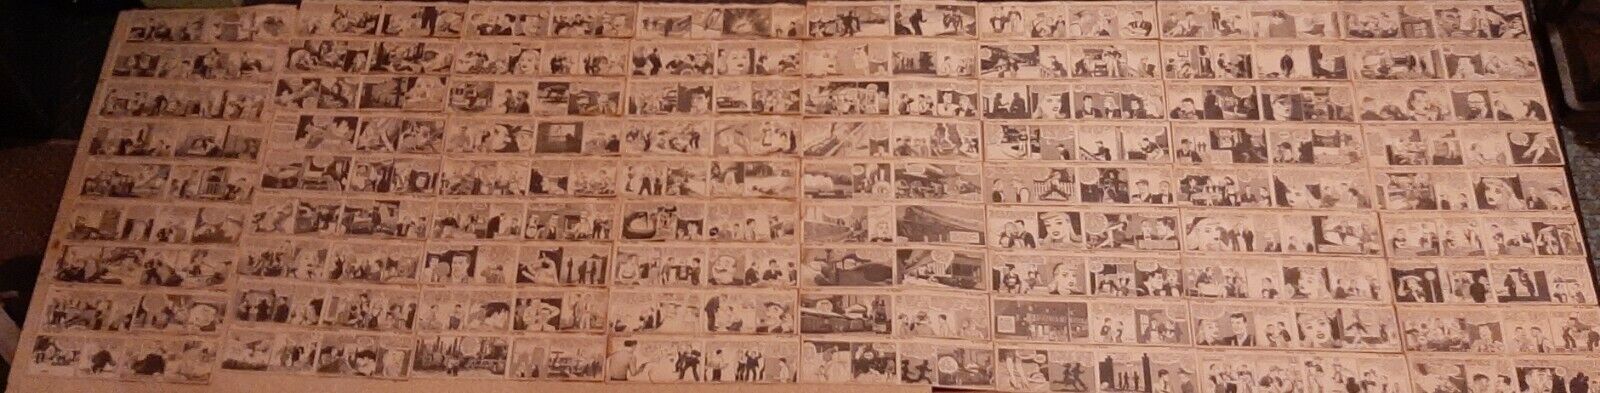 182 vintage Wash Tubbs Original Daily Comic Strips by Roy Crane, 1930-40\'s era